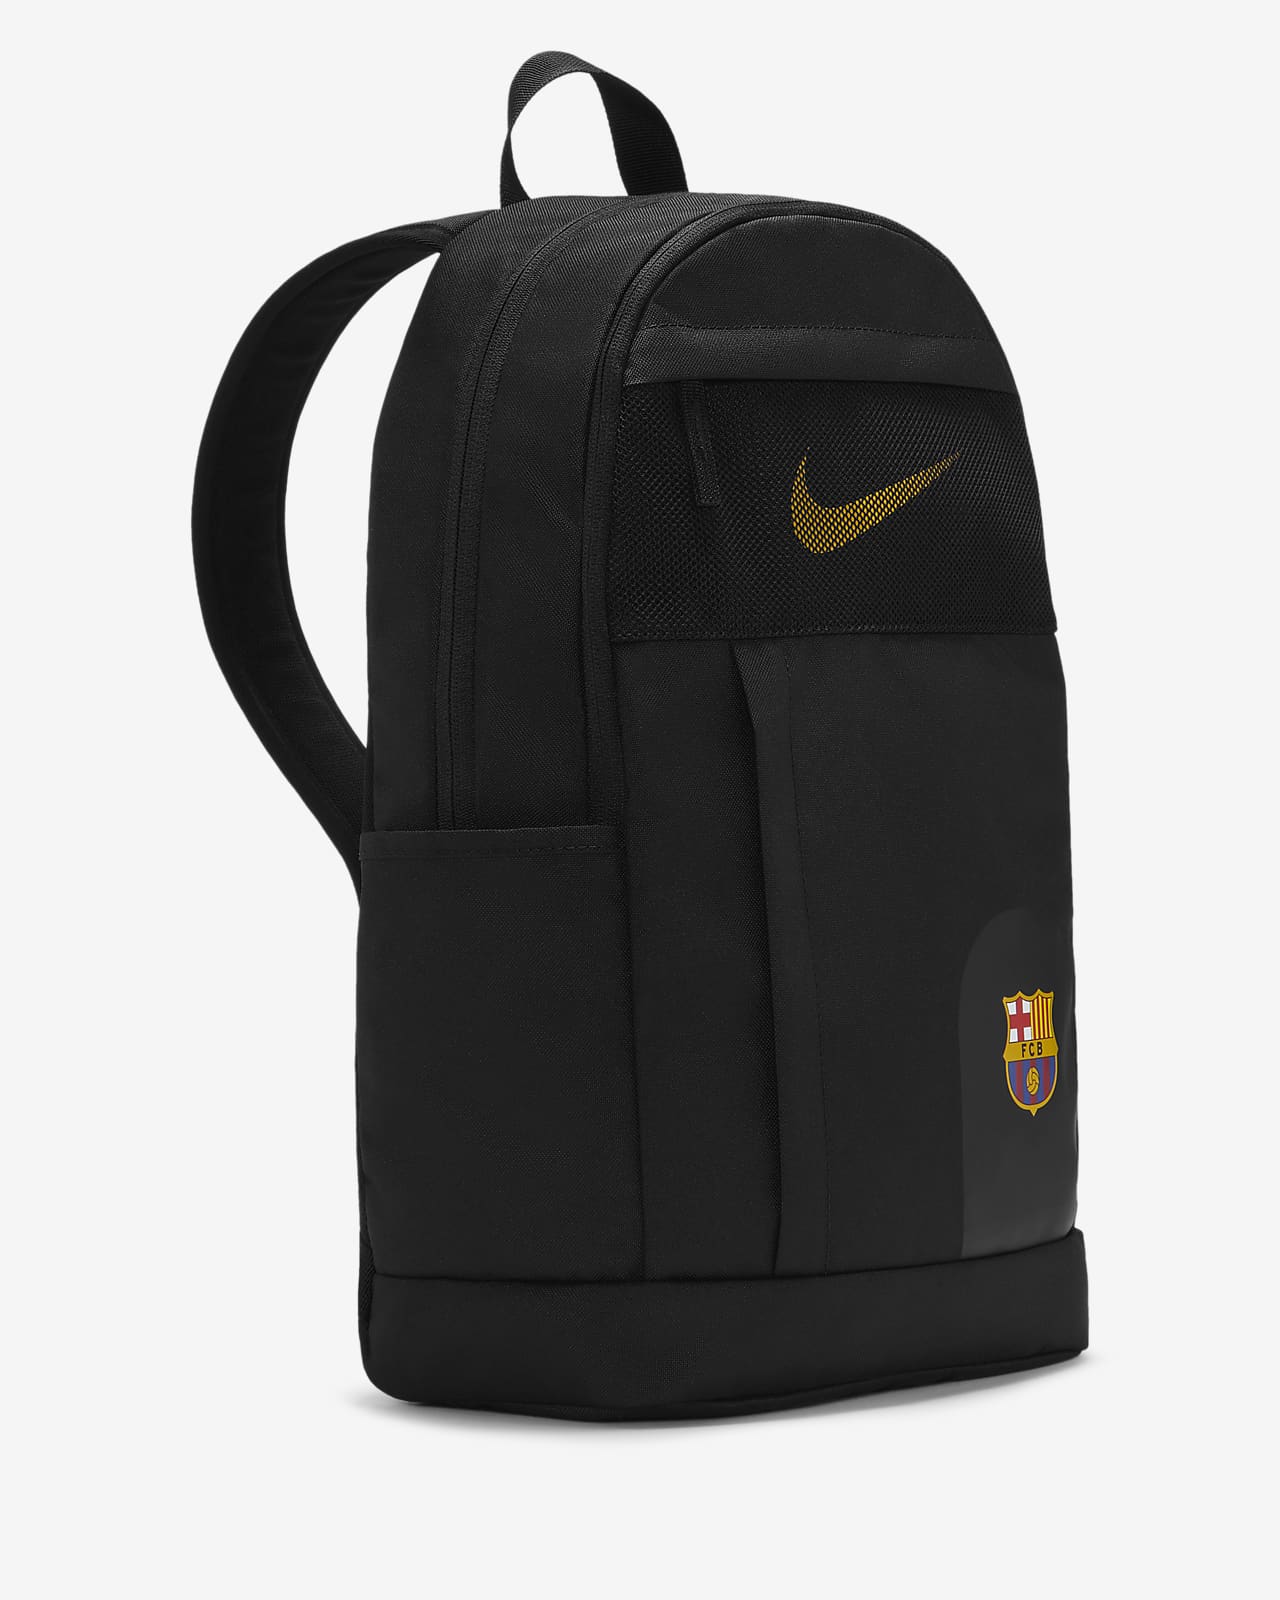 FC Barcelona Stadium Soccer Backpack (One Size)– backpacks4less.com